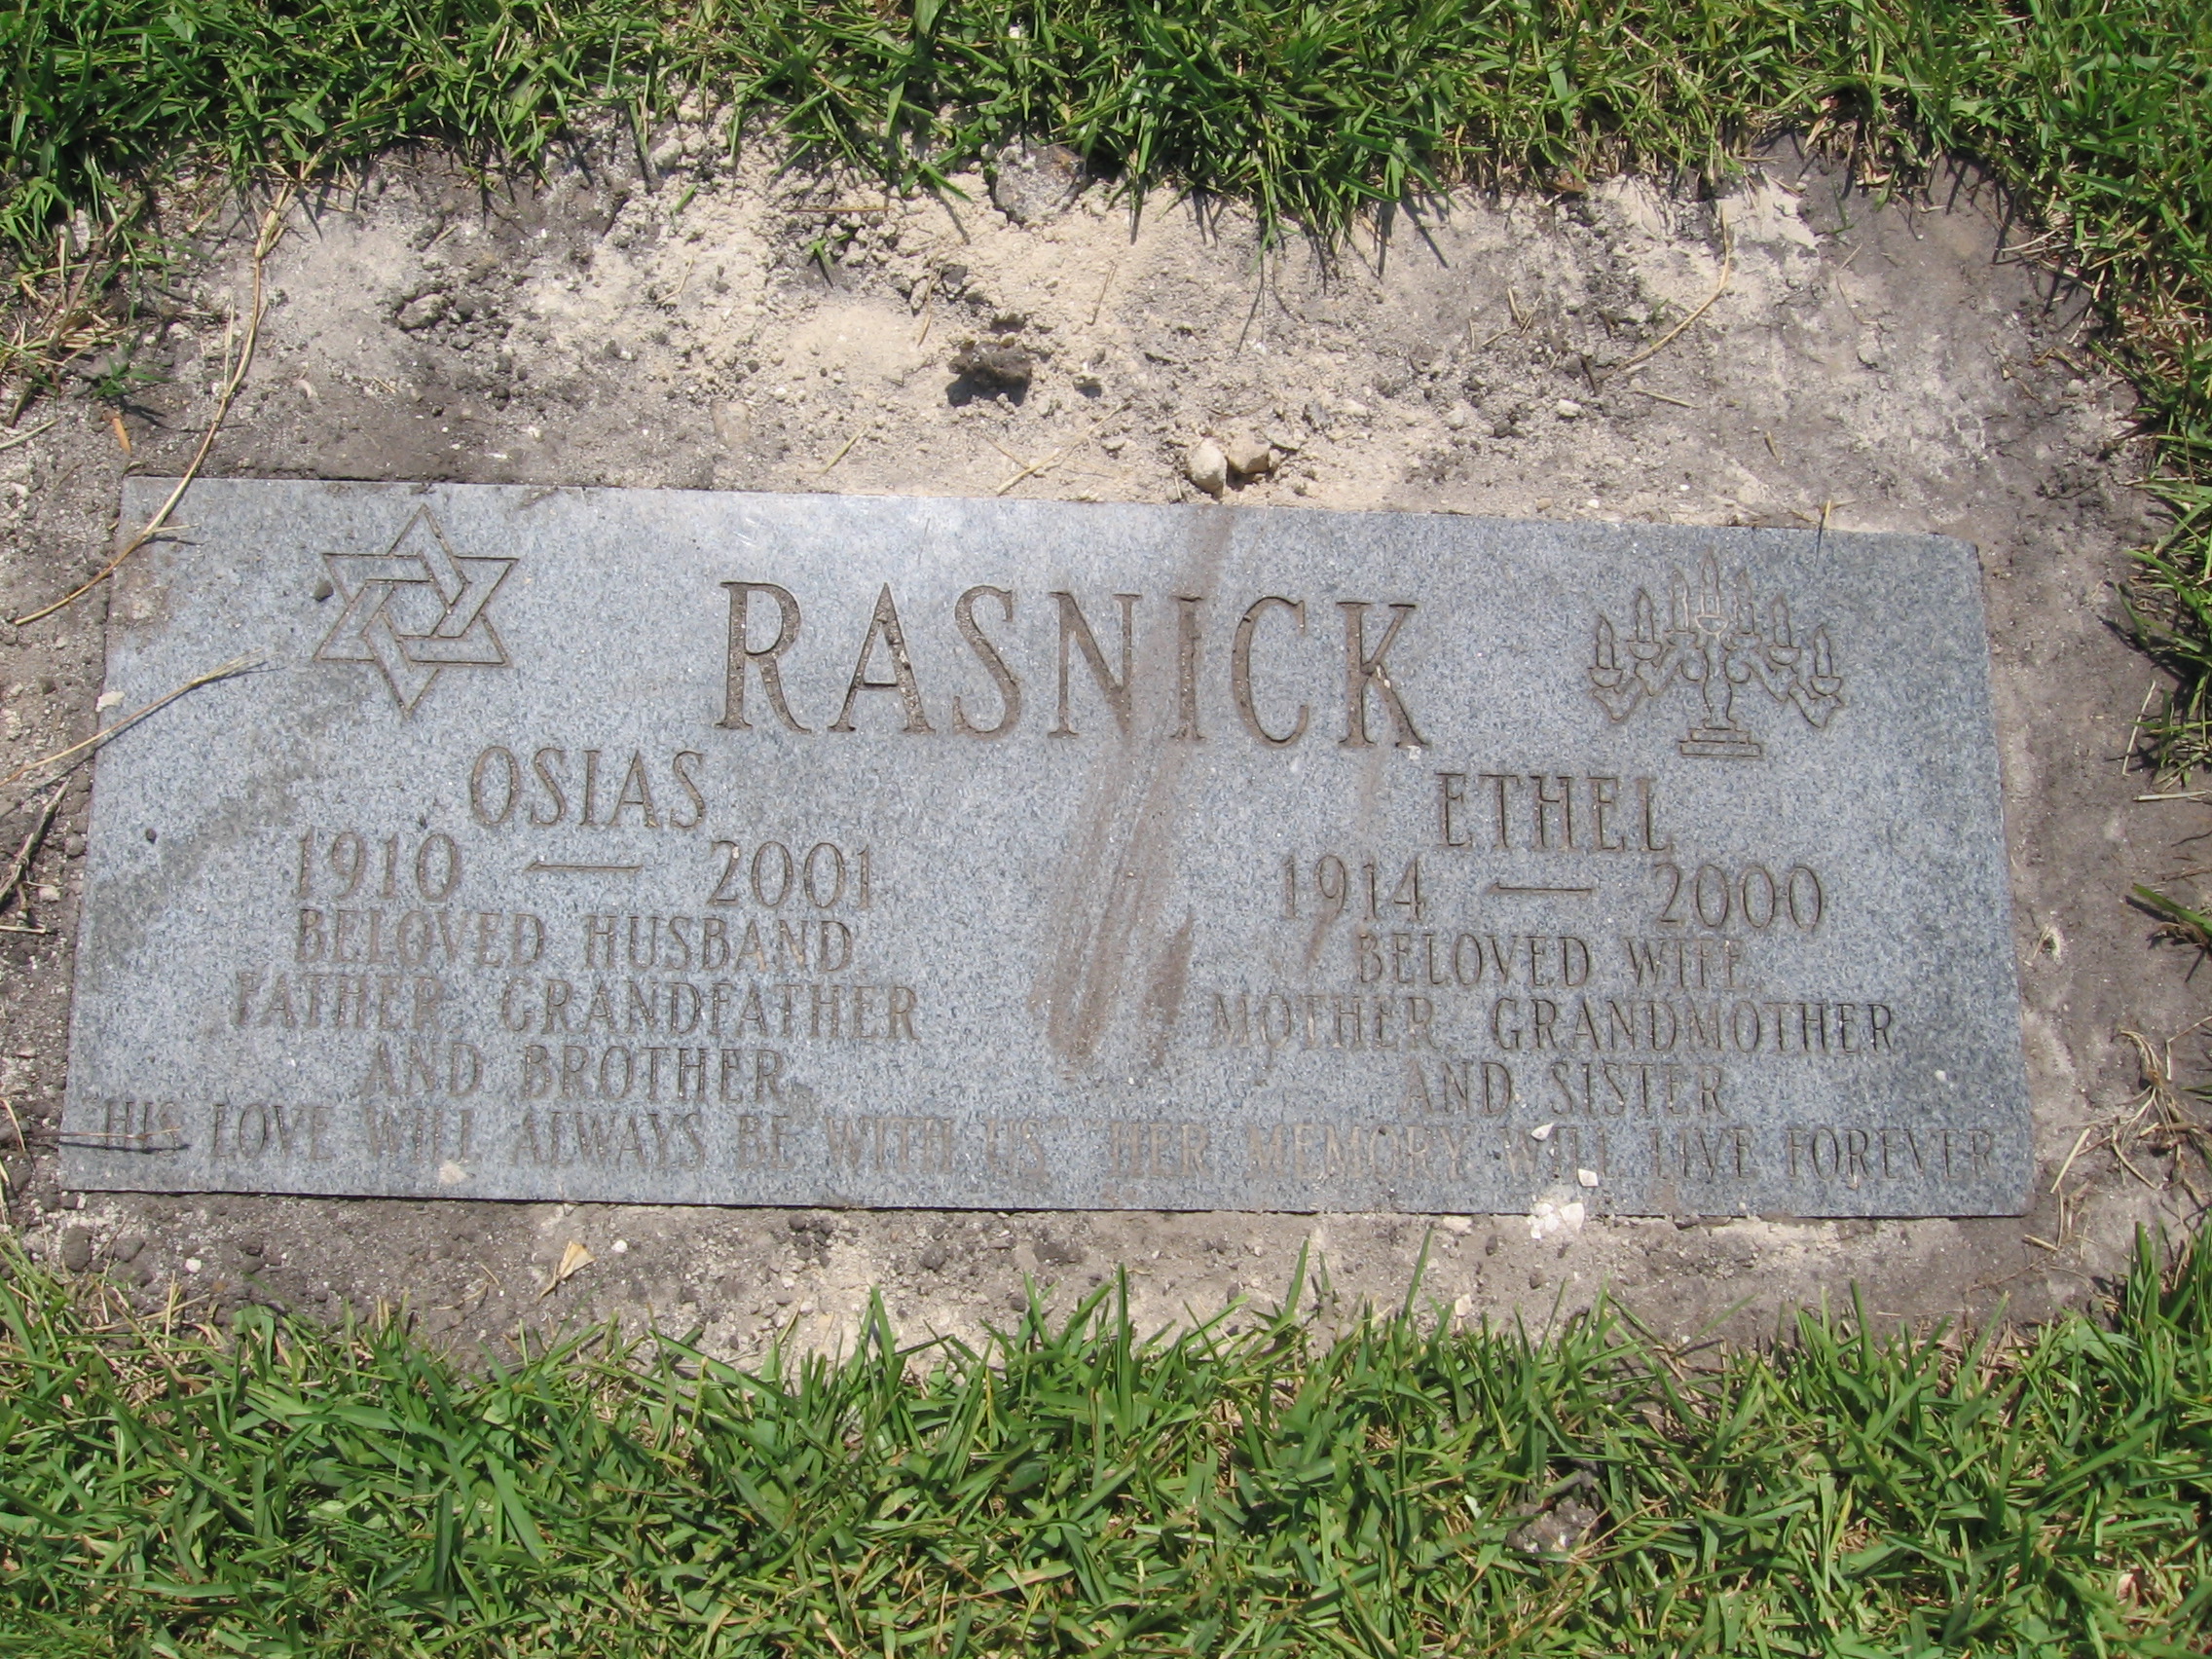 Ethel Rasnick